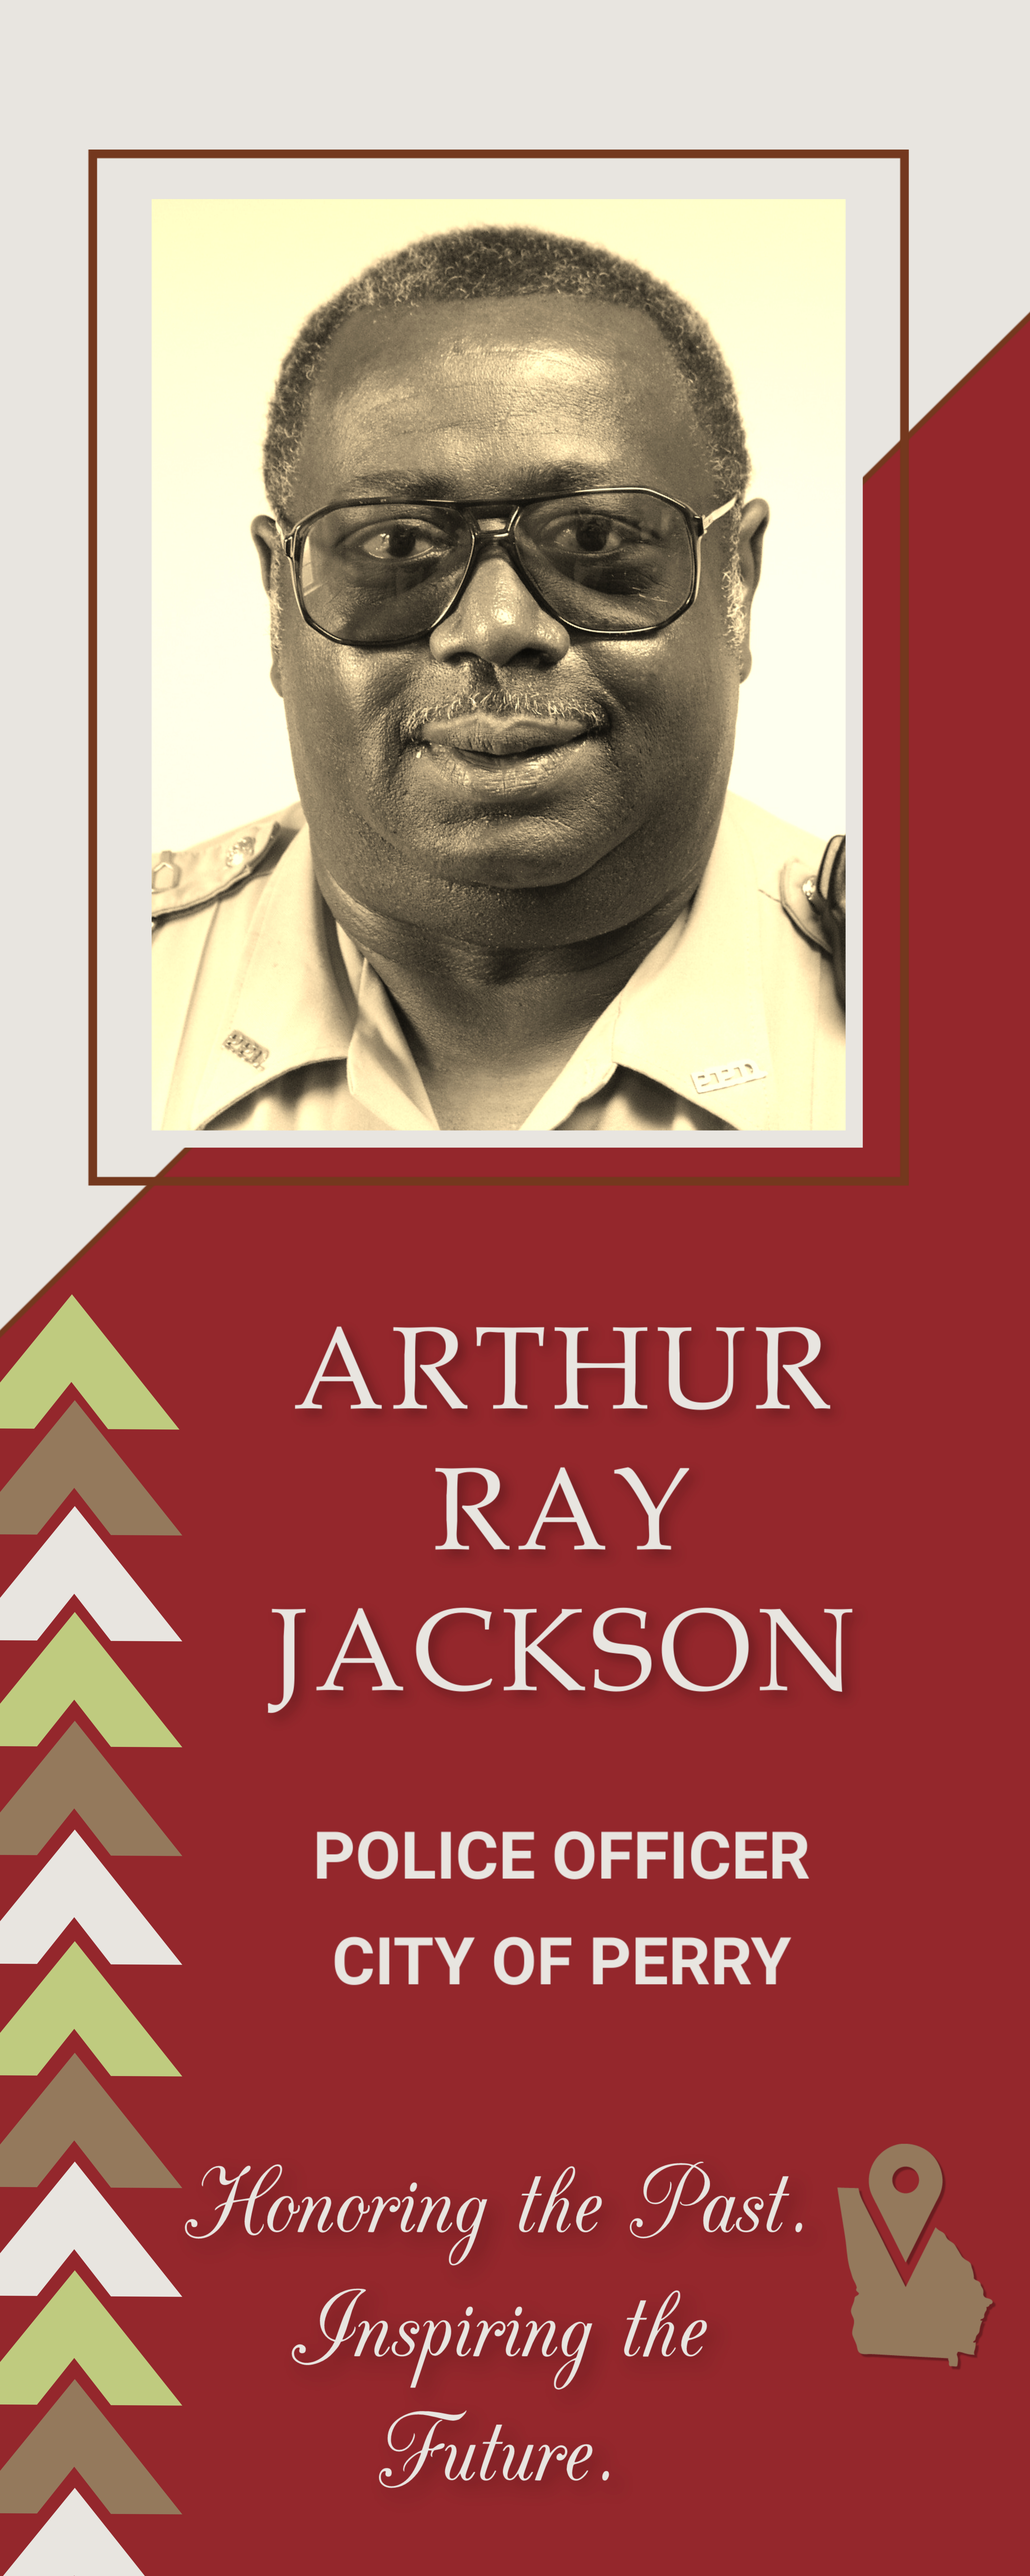 Arthur Ray Jackson